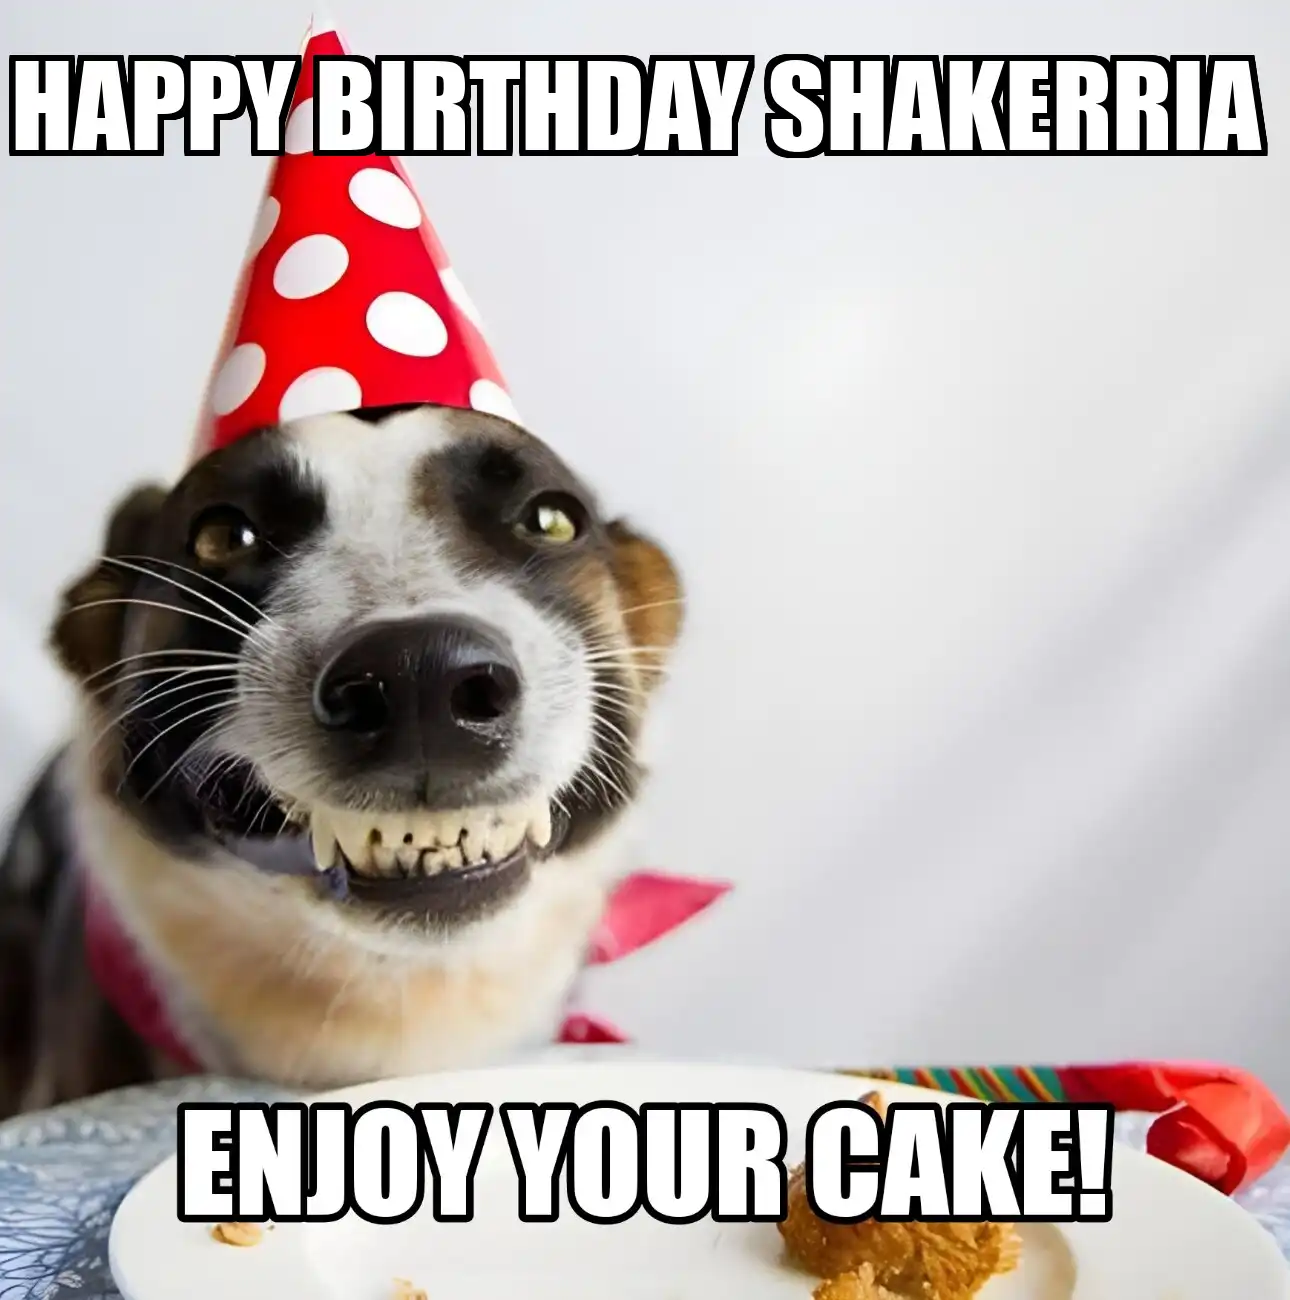 Happy Birthday Shakerria Enjoy Your Cake Dog Meme